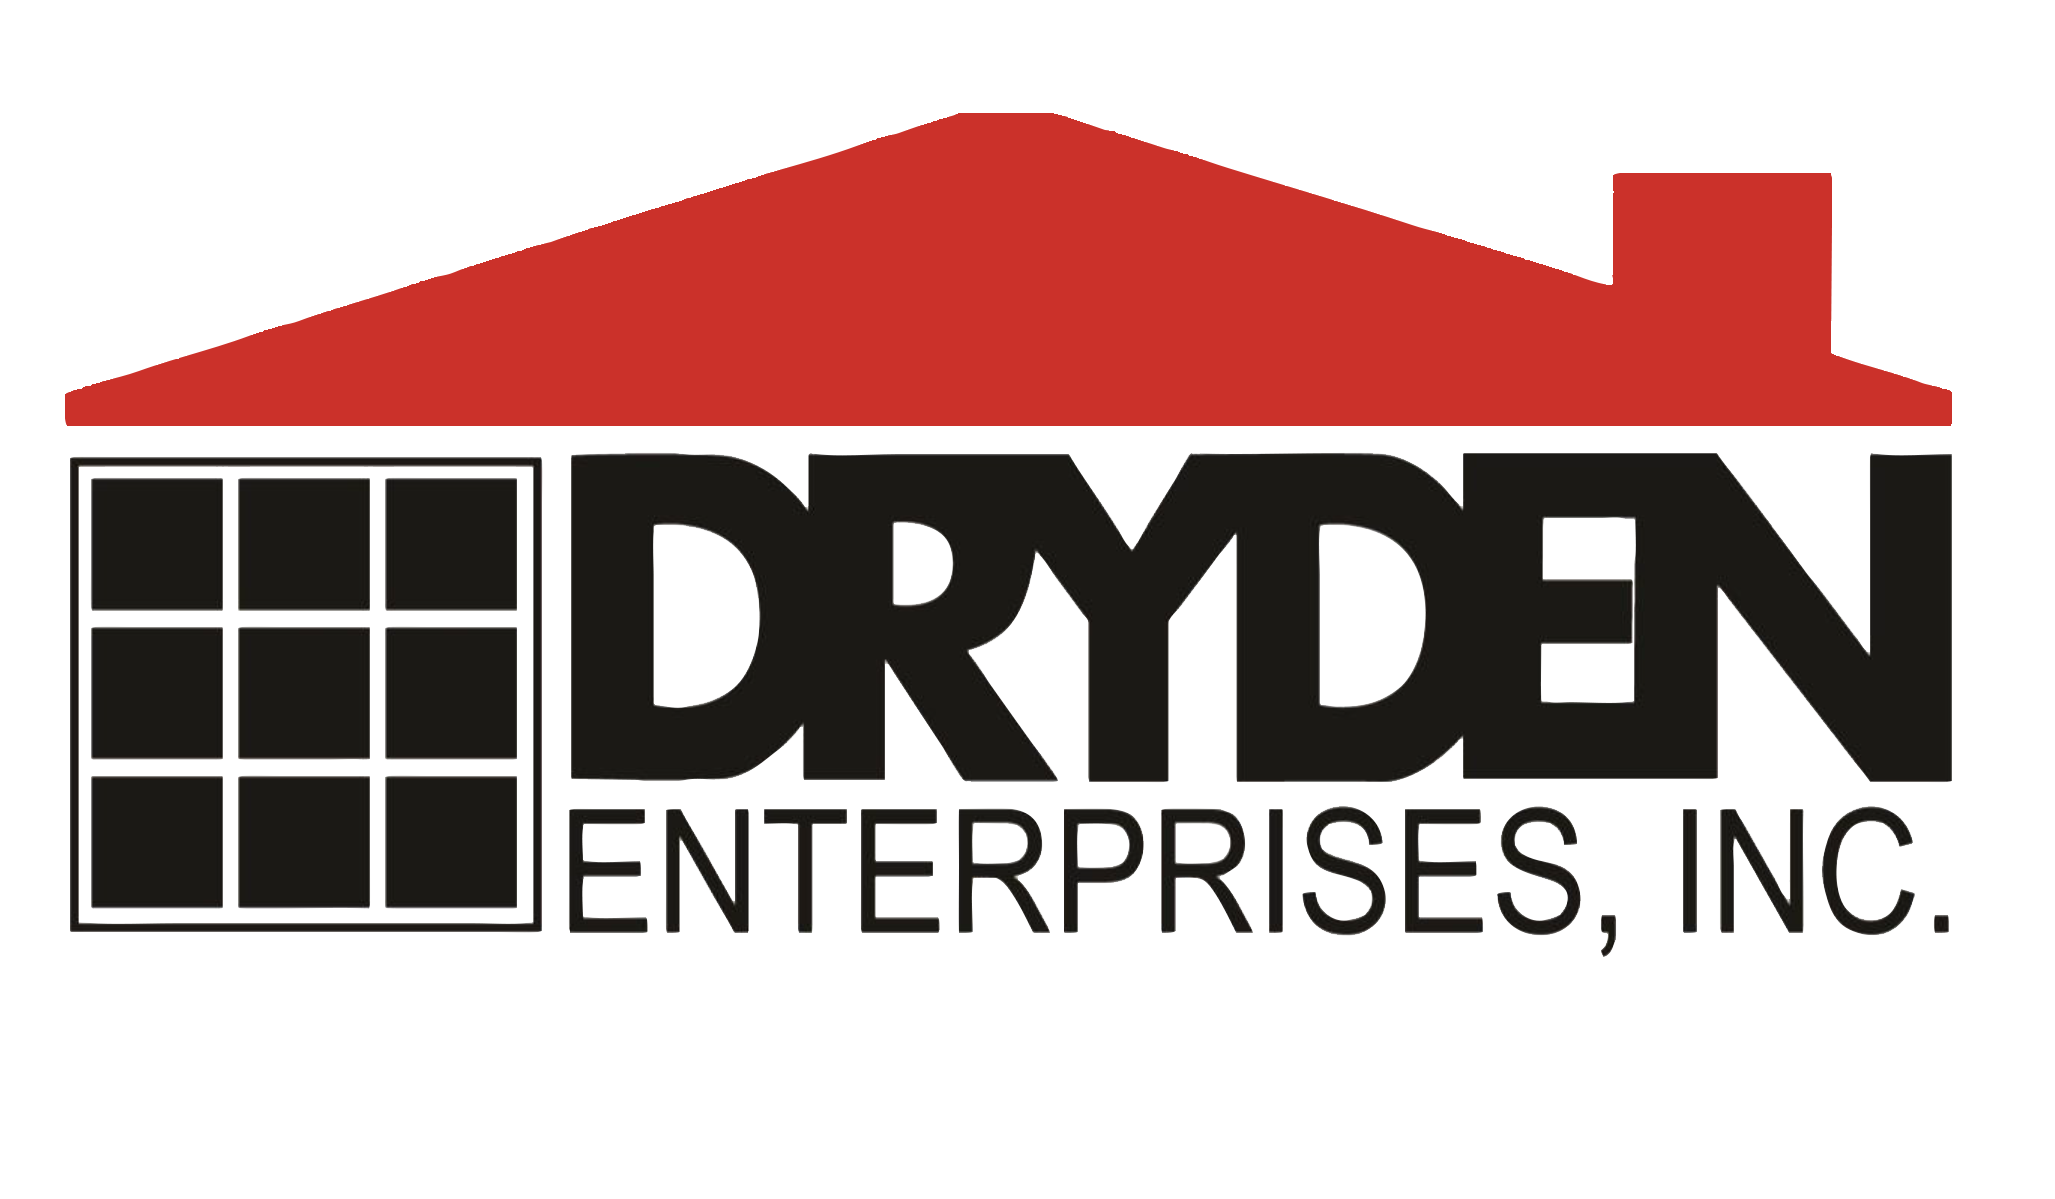 Dryden Enterprises, Inc. - Service Online Solution